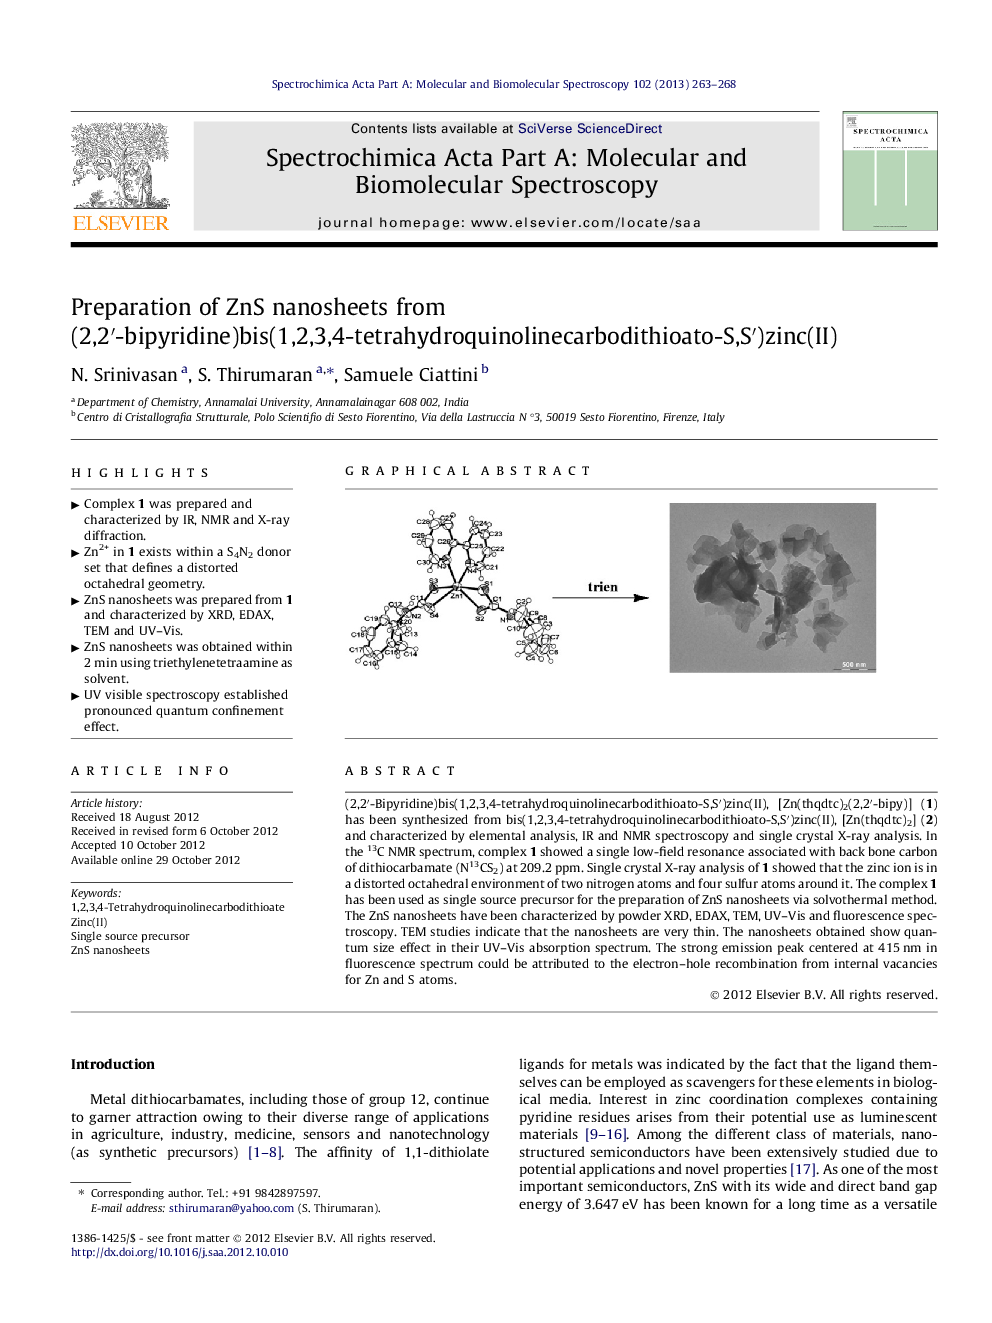 Preparation of ZnS nanosheets from (2,2′-bipyridine)bis(1,2,3,4-tetrahydroquinolinecarbodithioato-S,S′)zinc(II)